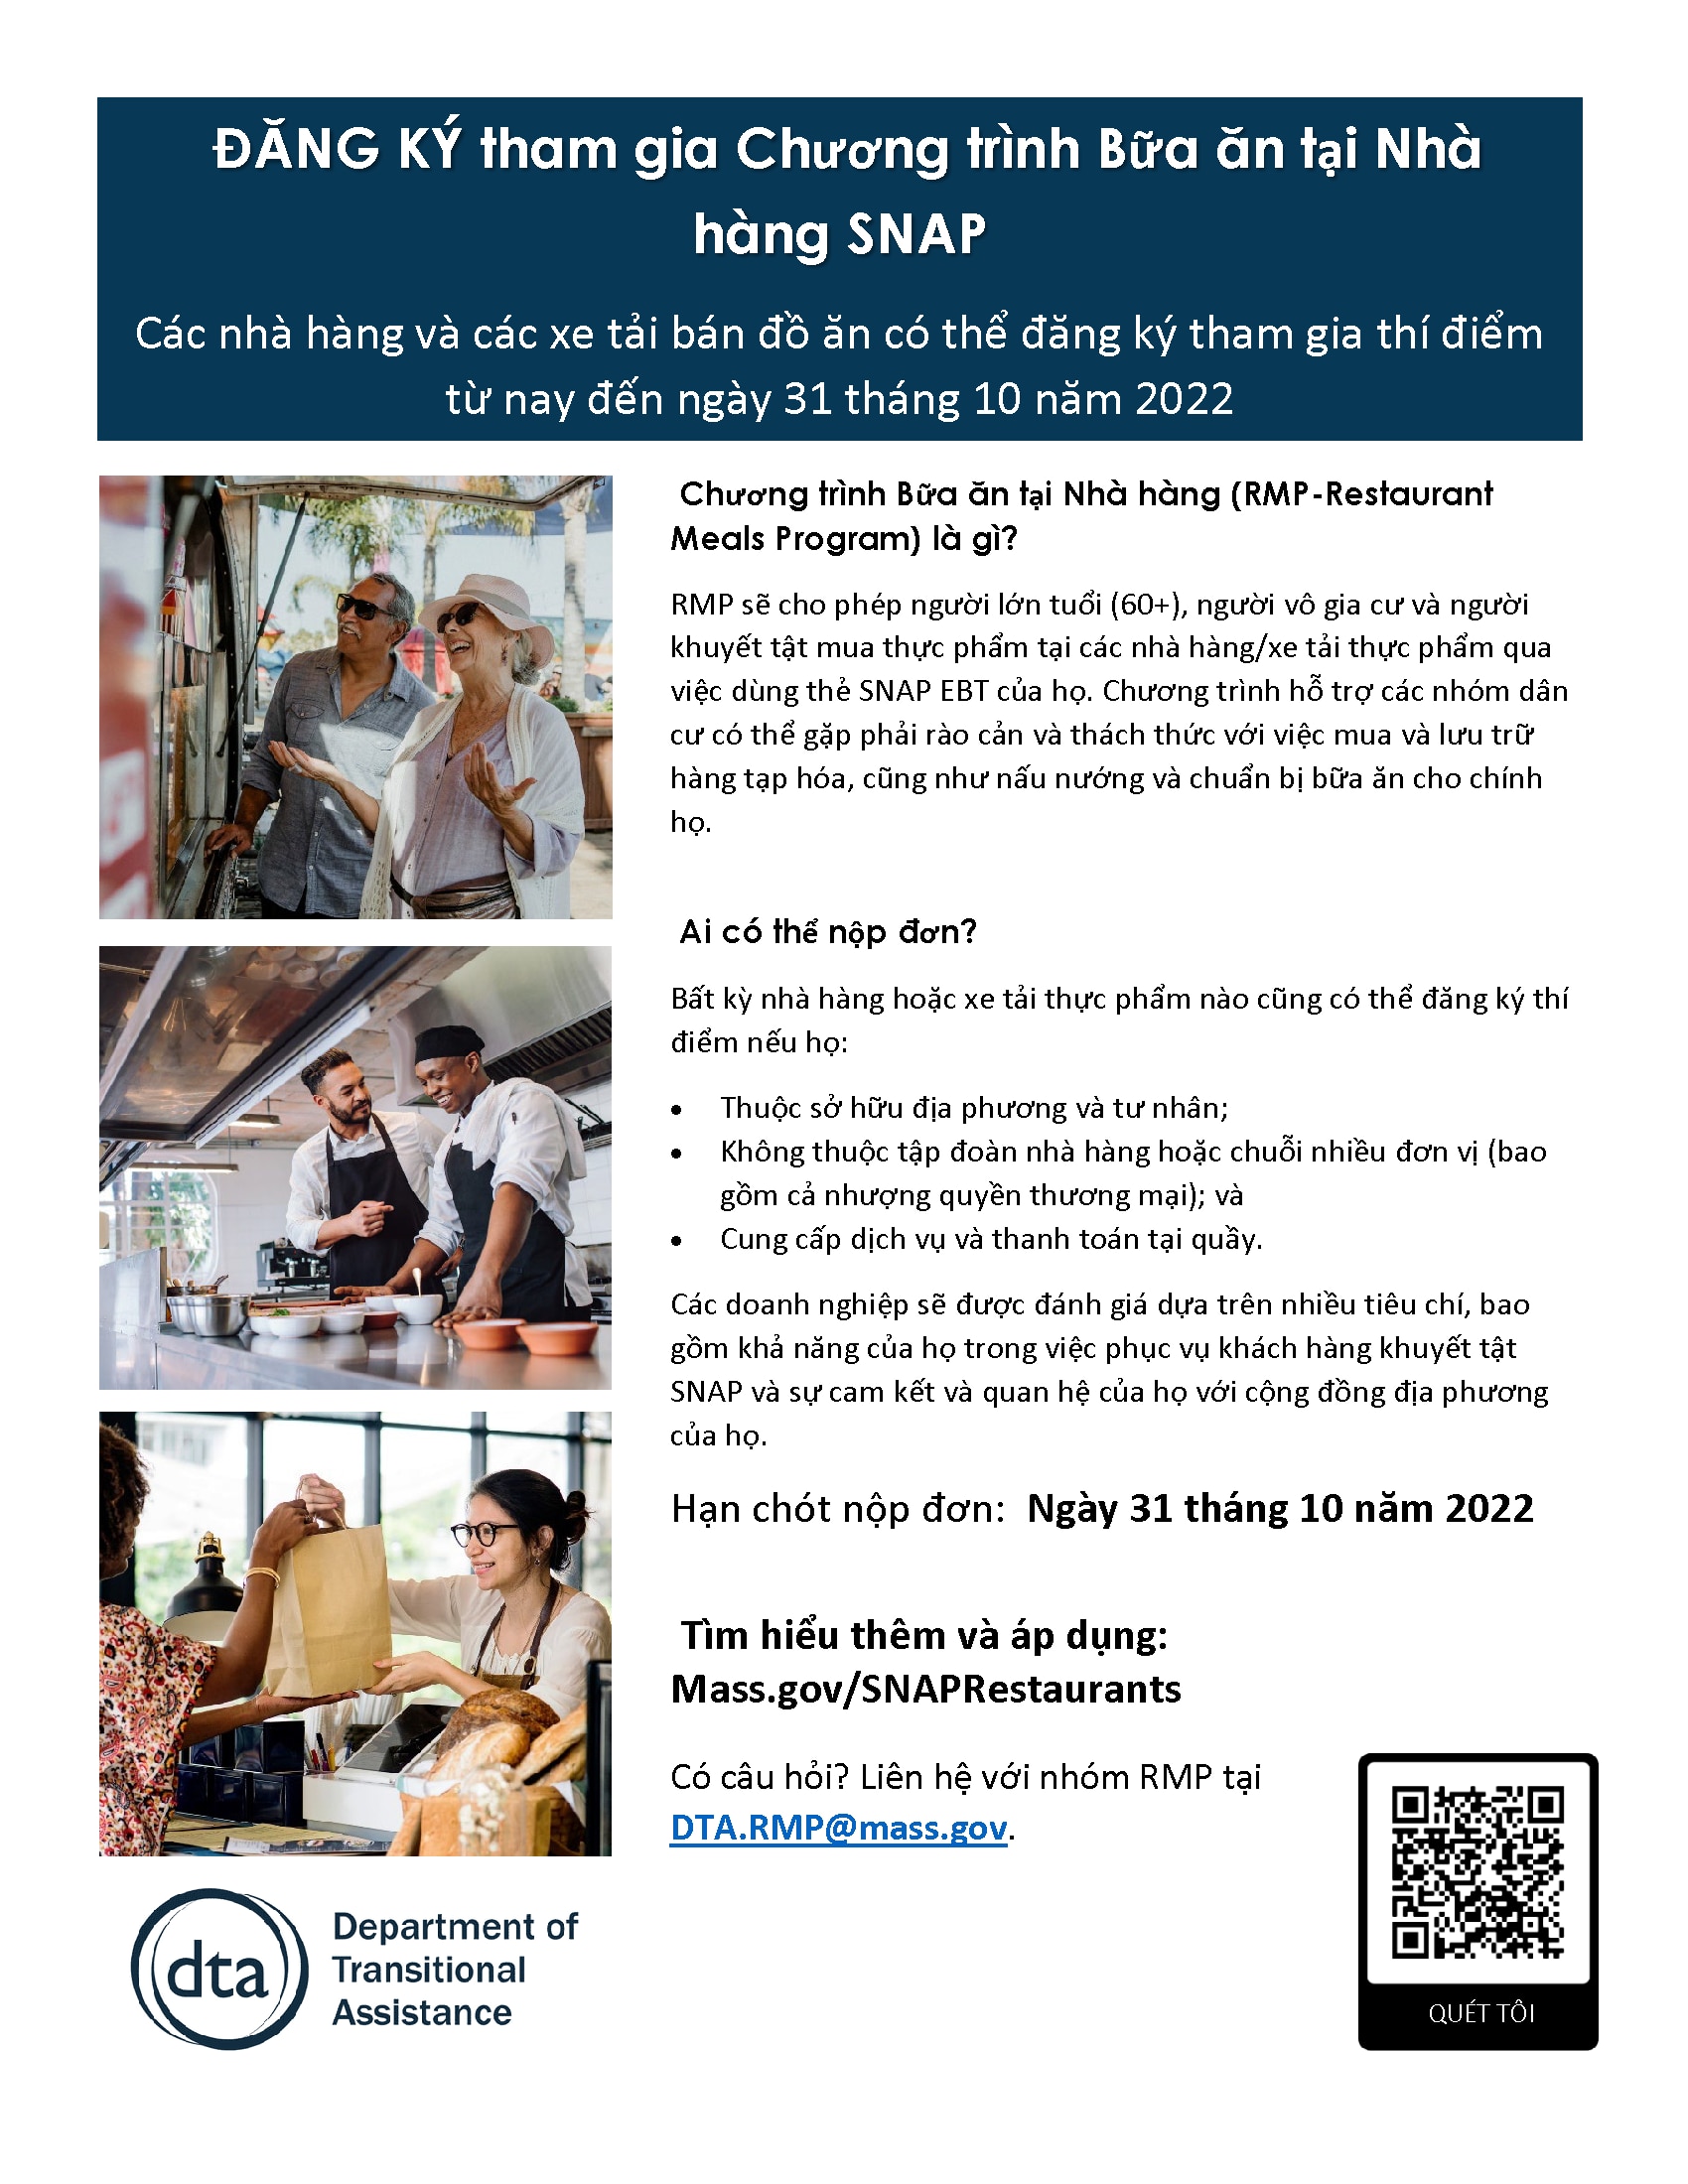 SNAP Restaurant Meals Program (RMP) Flyer for Vendors - Vietnamese